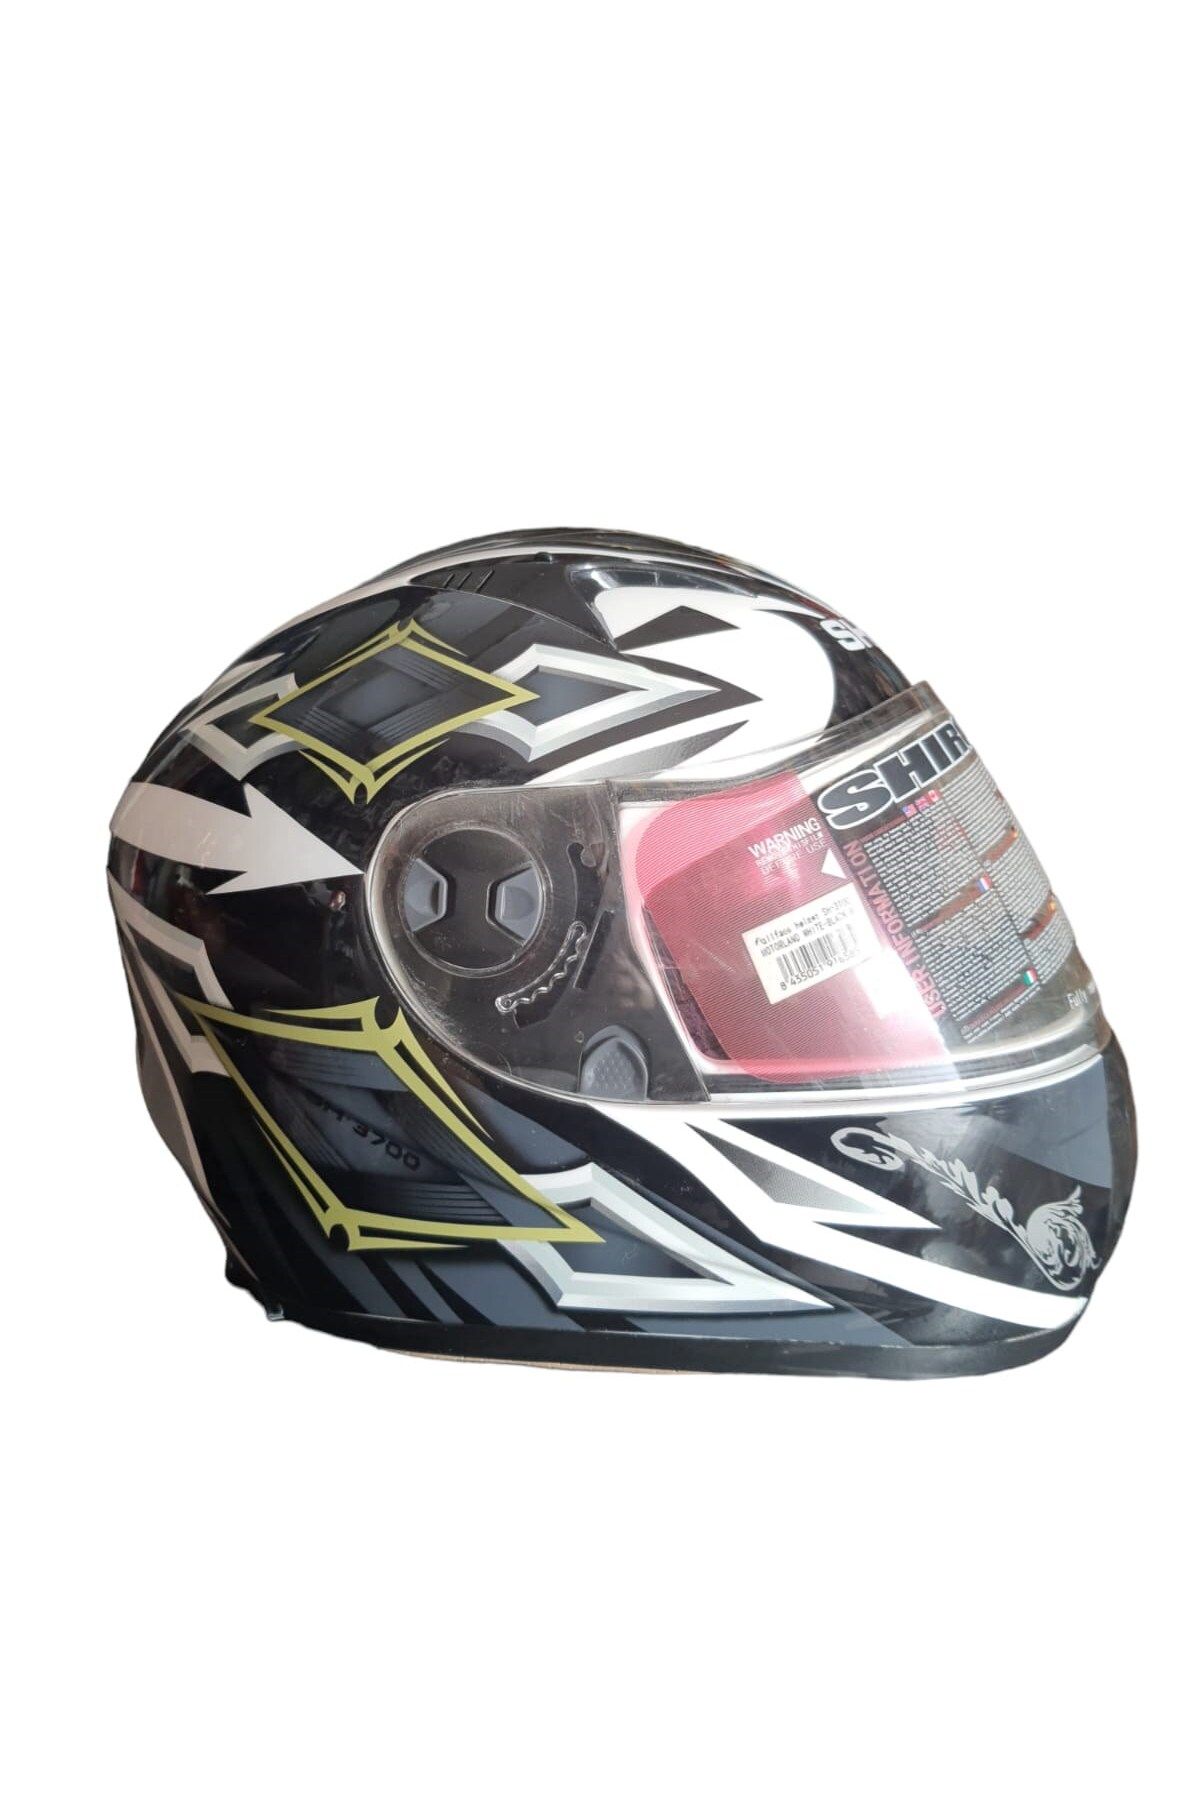 Shiro SH3700 Helmet Full Face Motosiklet Kaskı Beyaz Siyah